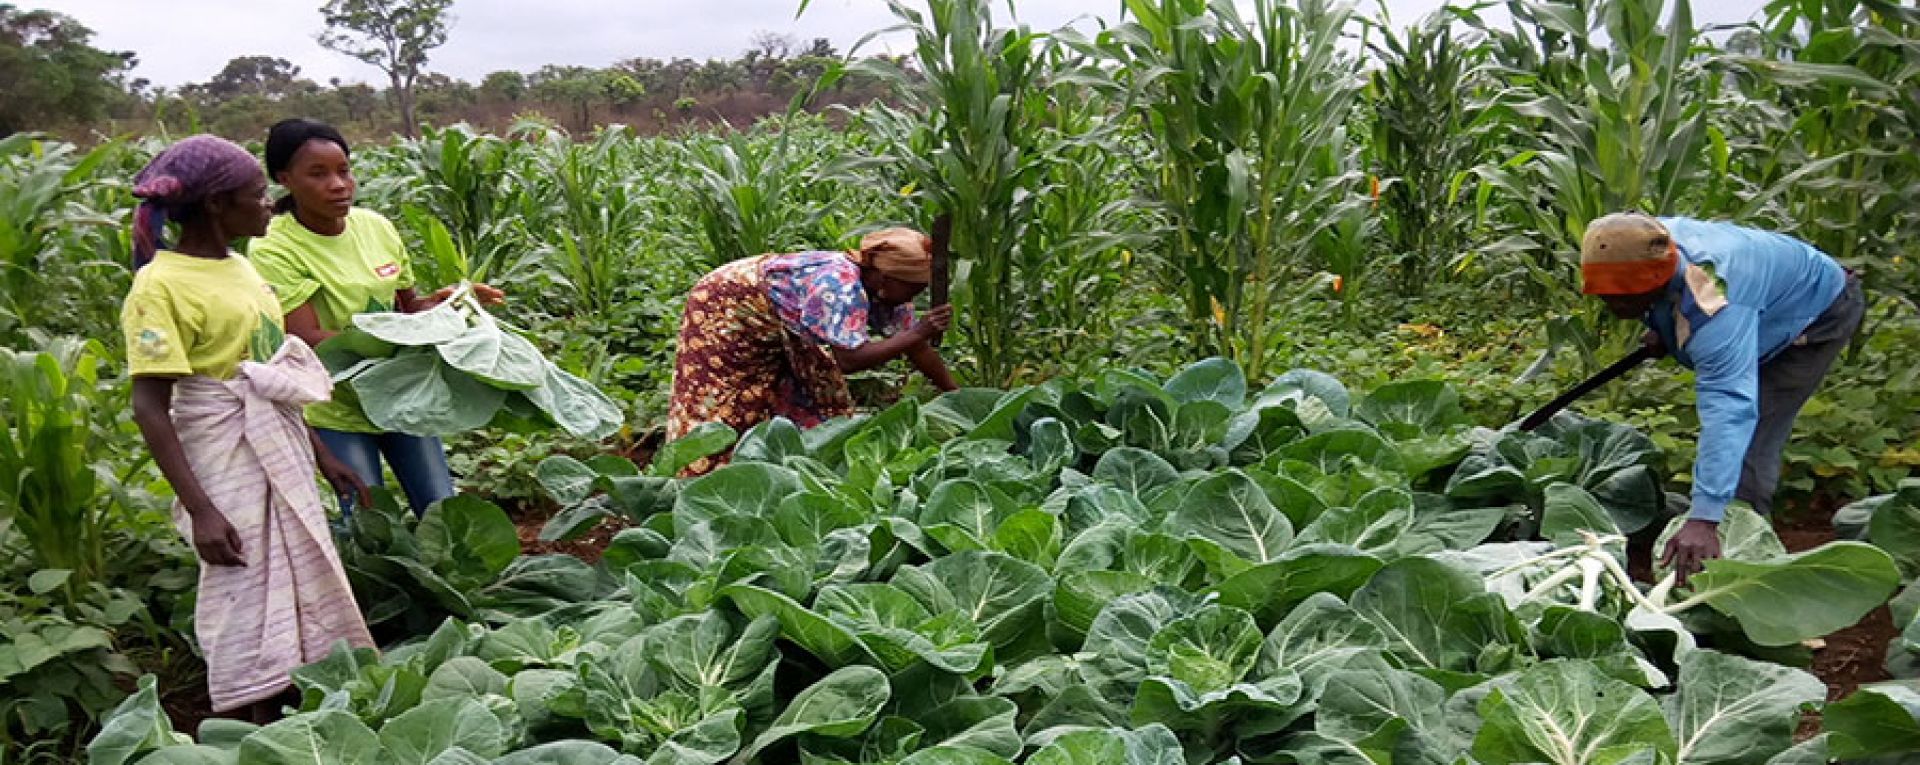 Farmers harvesting crops in Angola